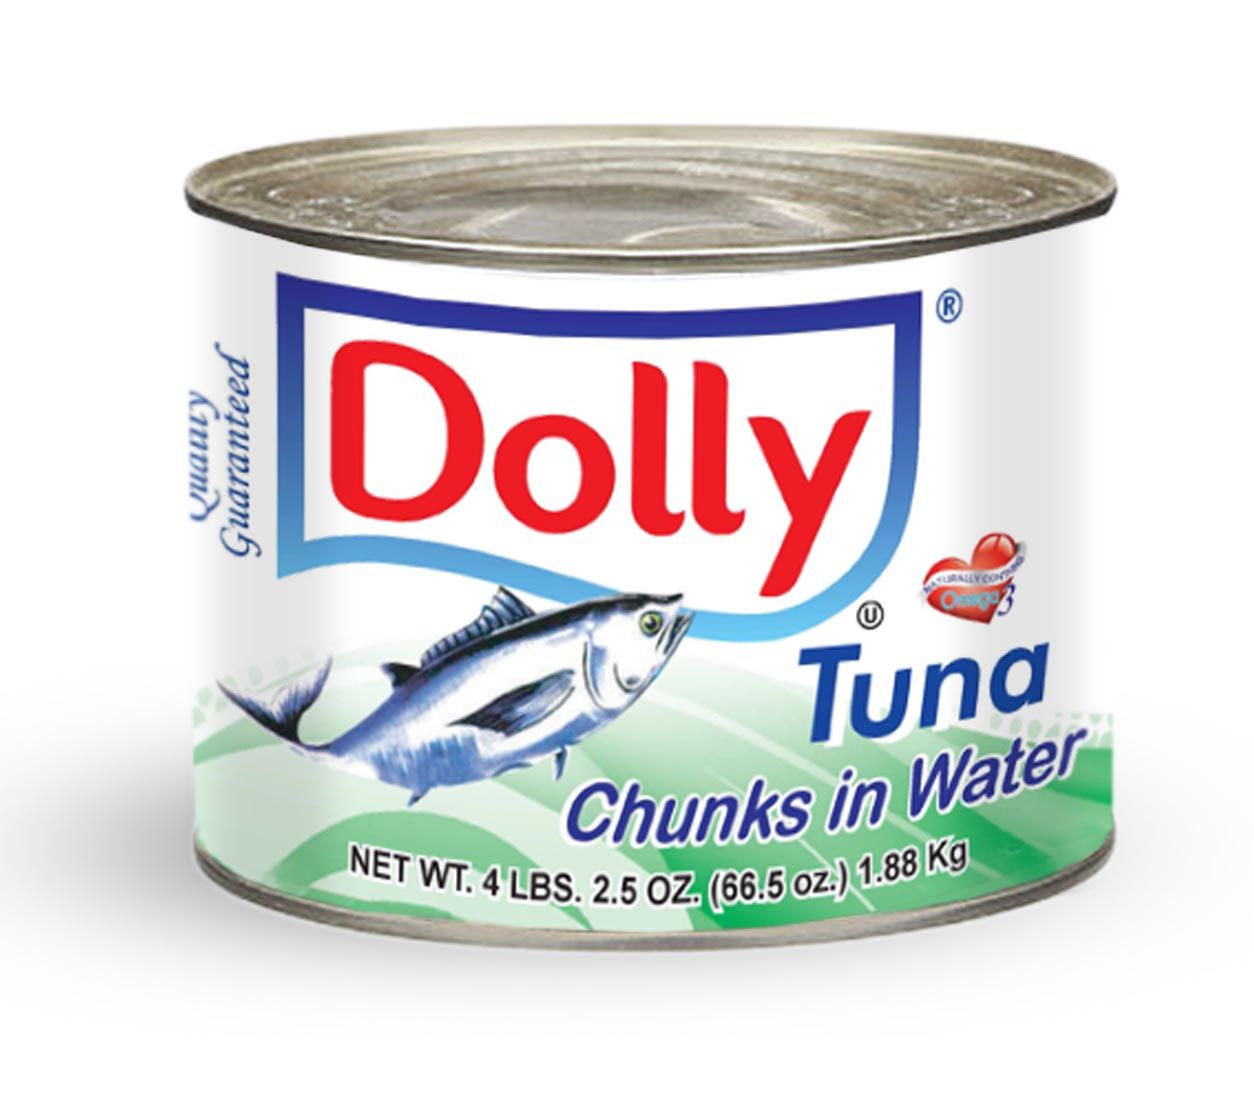 Canned Tuna chunks in water